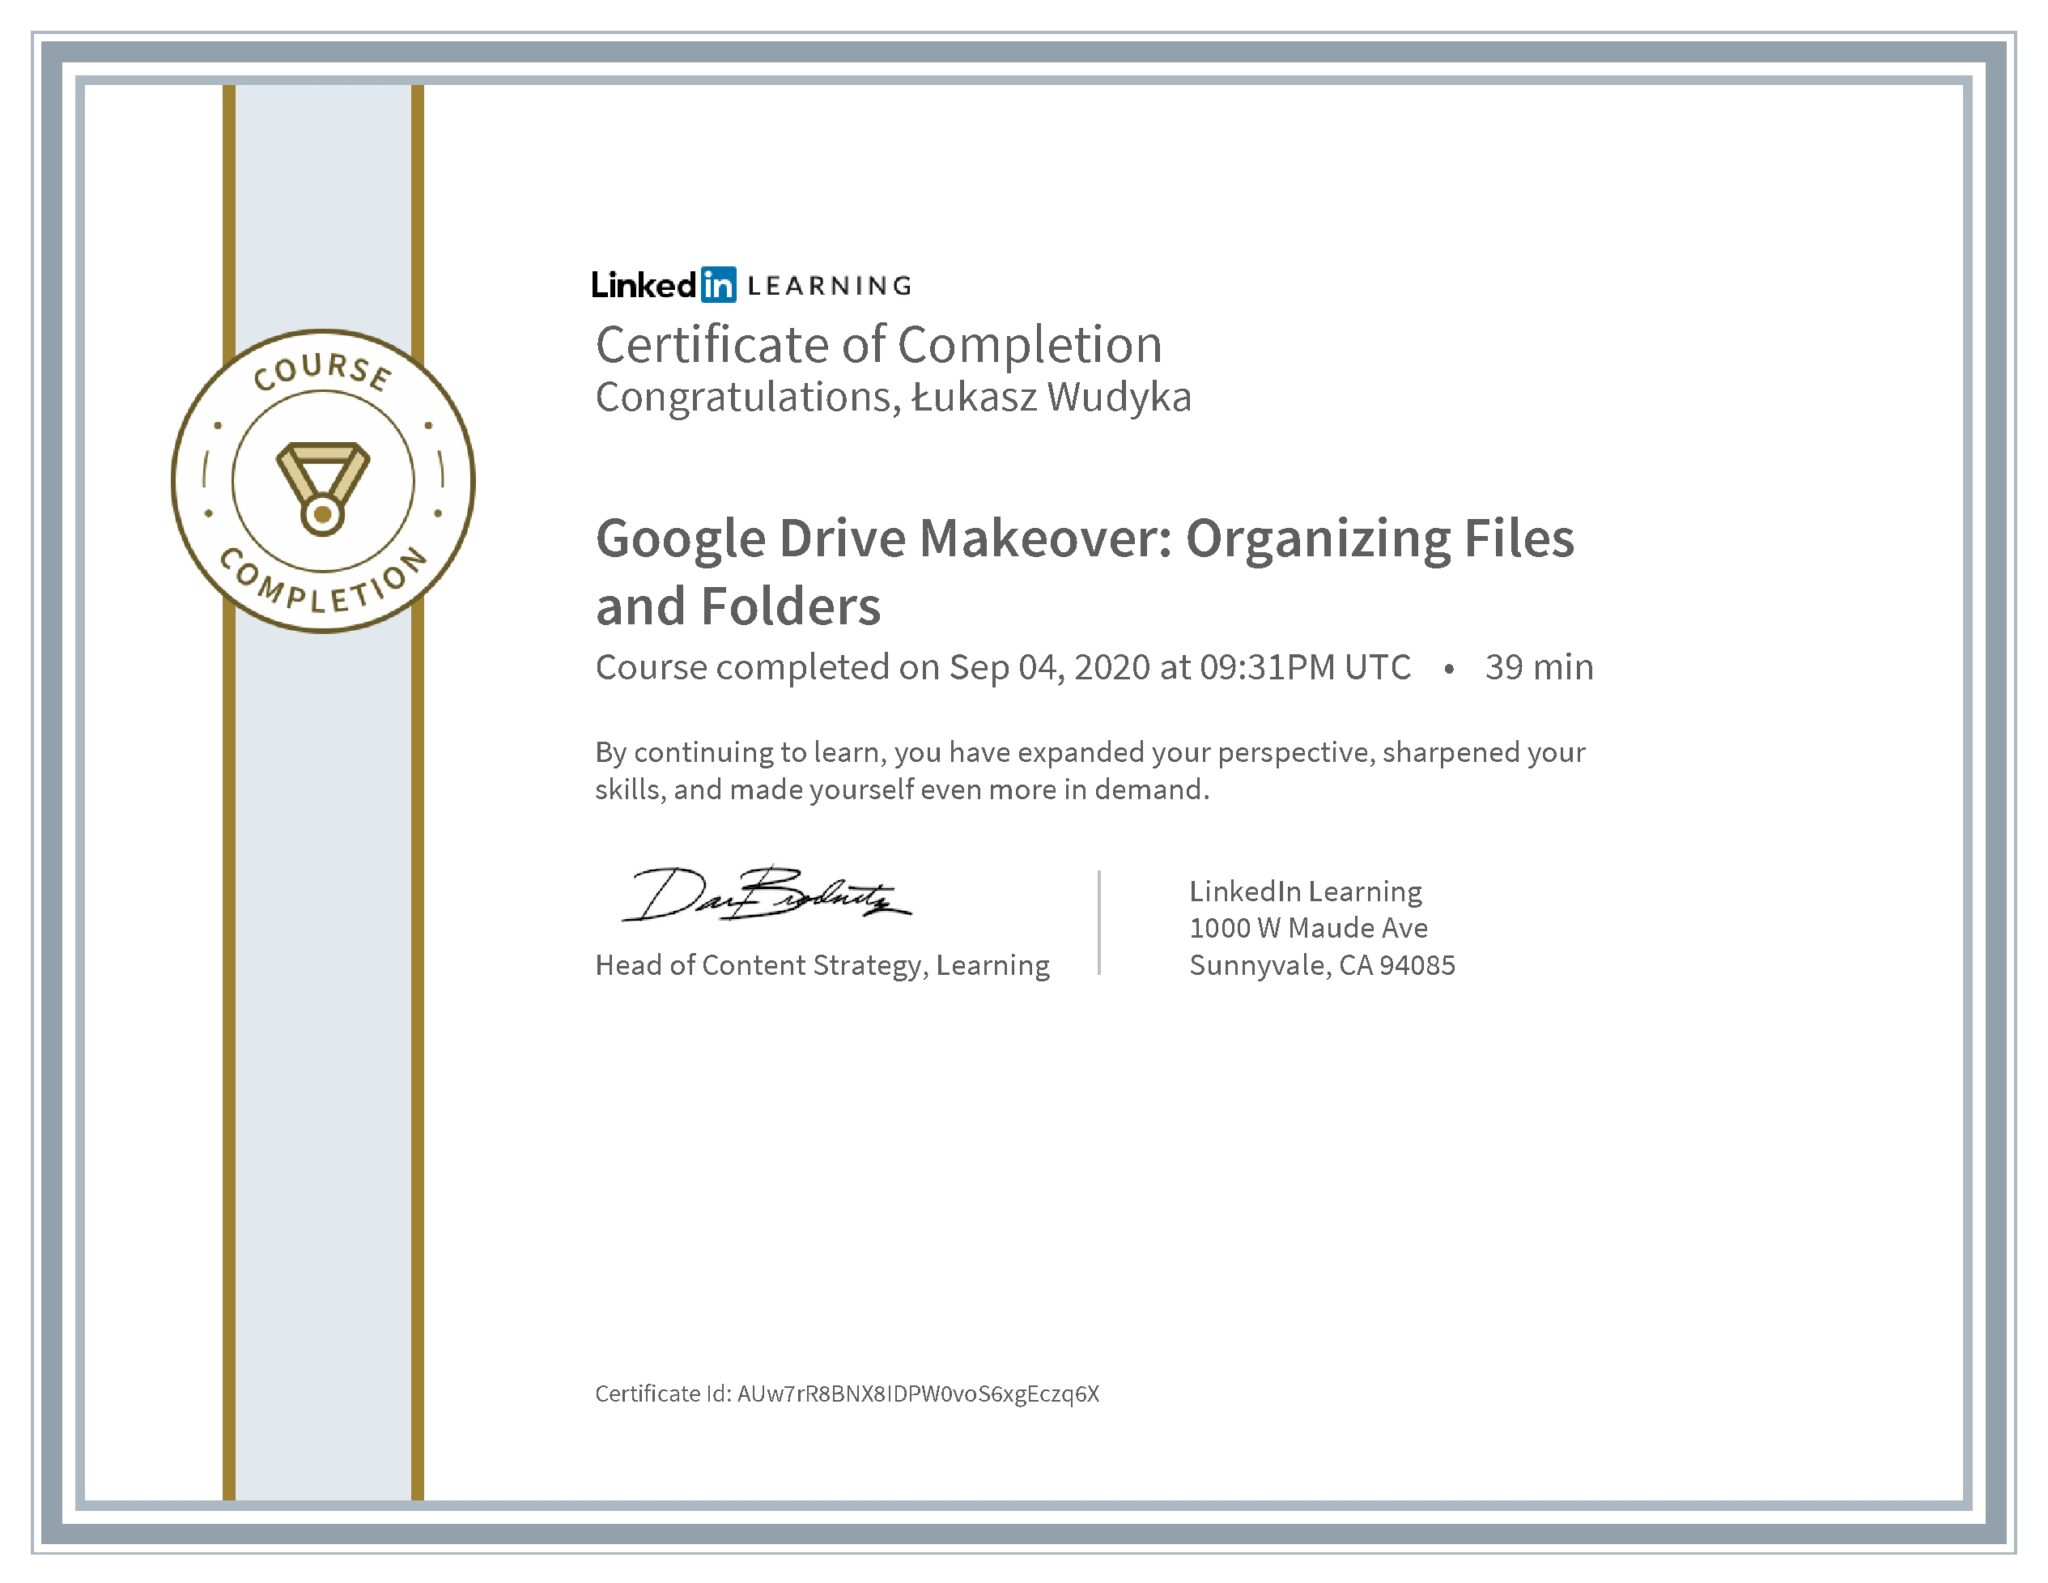 Łukasz Wudyka certyfikat LinkedIn Google Drive Makeover: Organizing Files and Folders